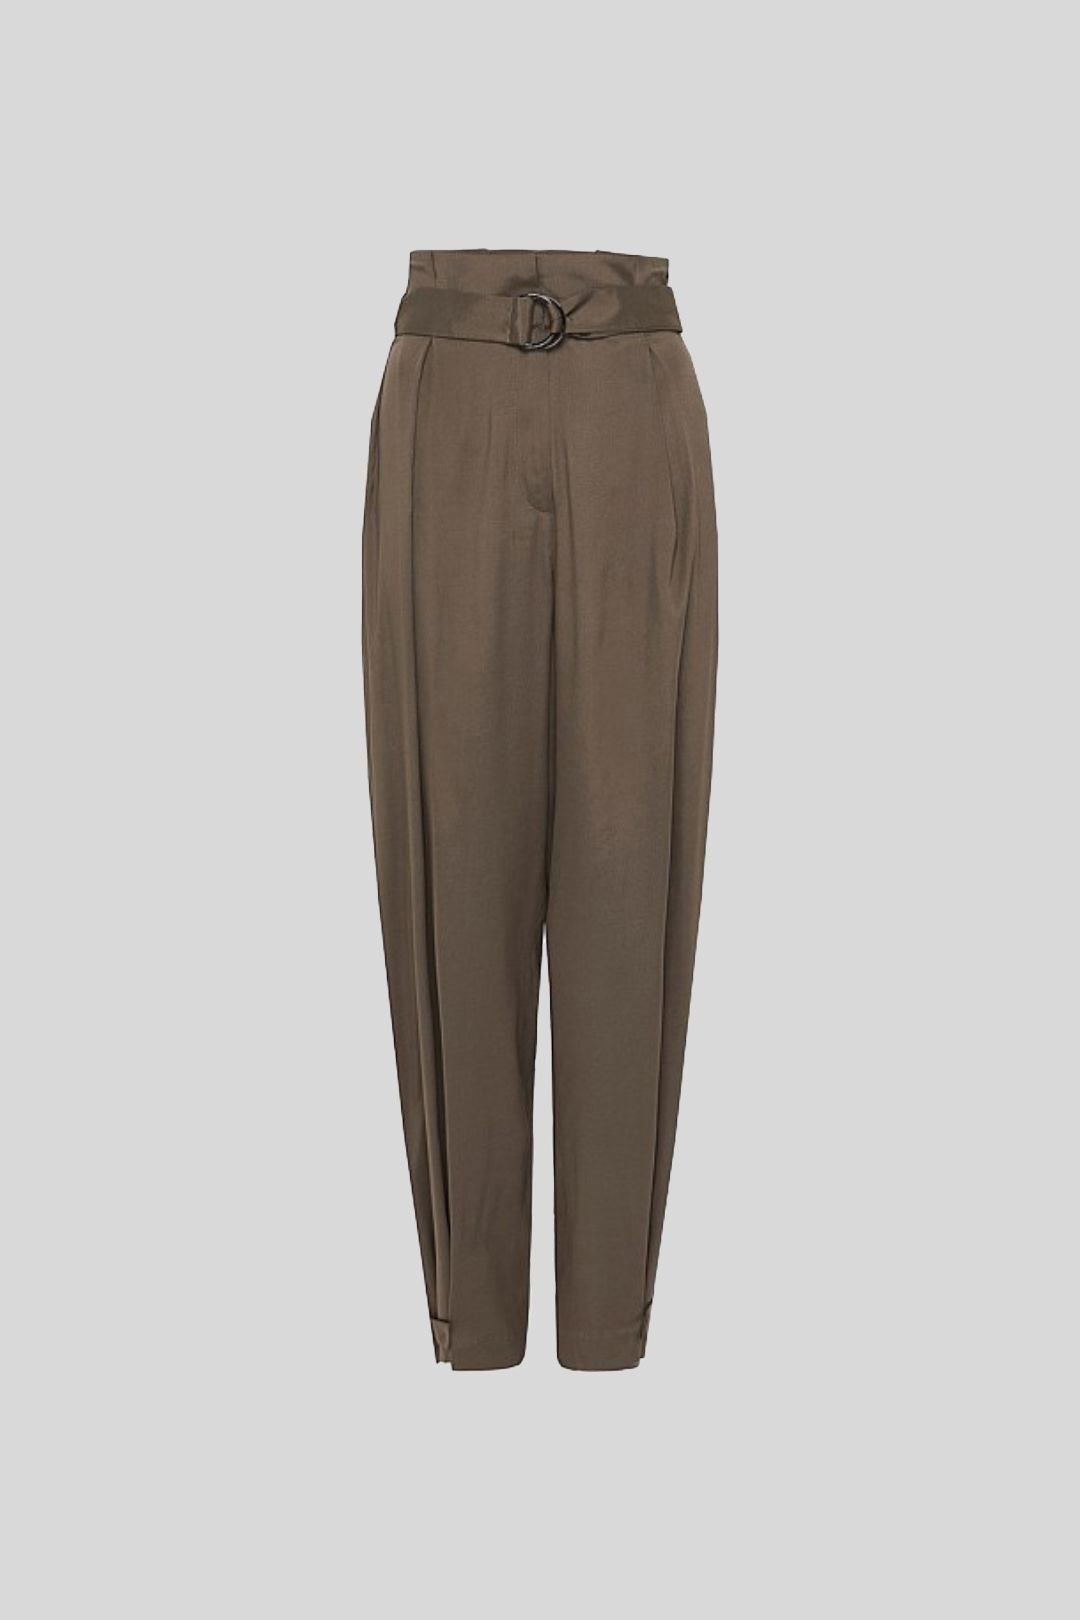 Bianca spender - Silk Bronze Paperbark Pants